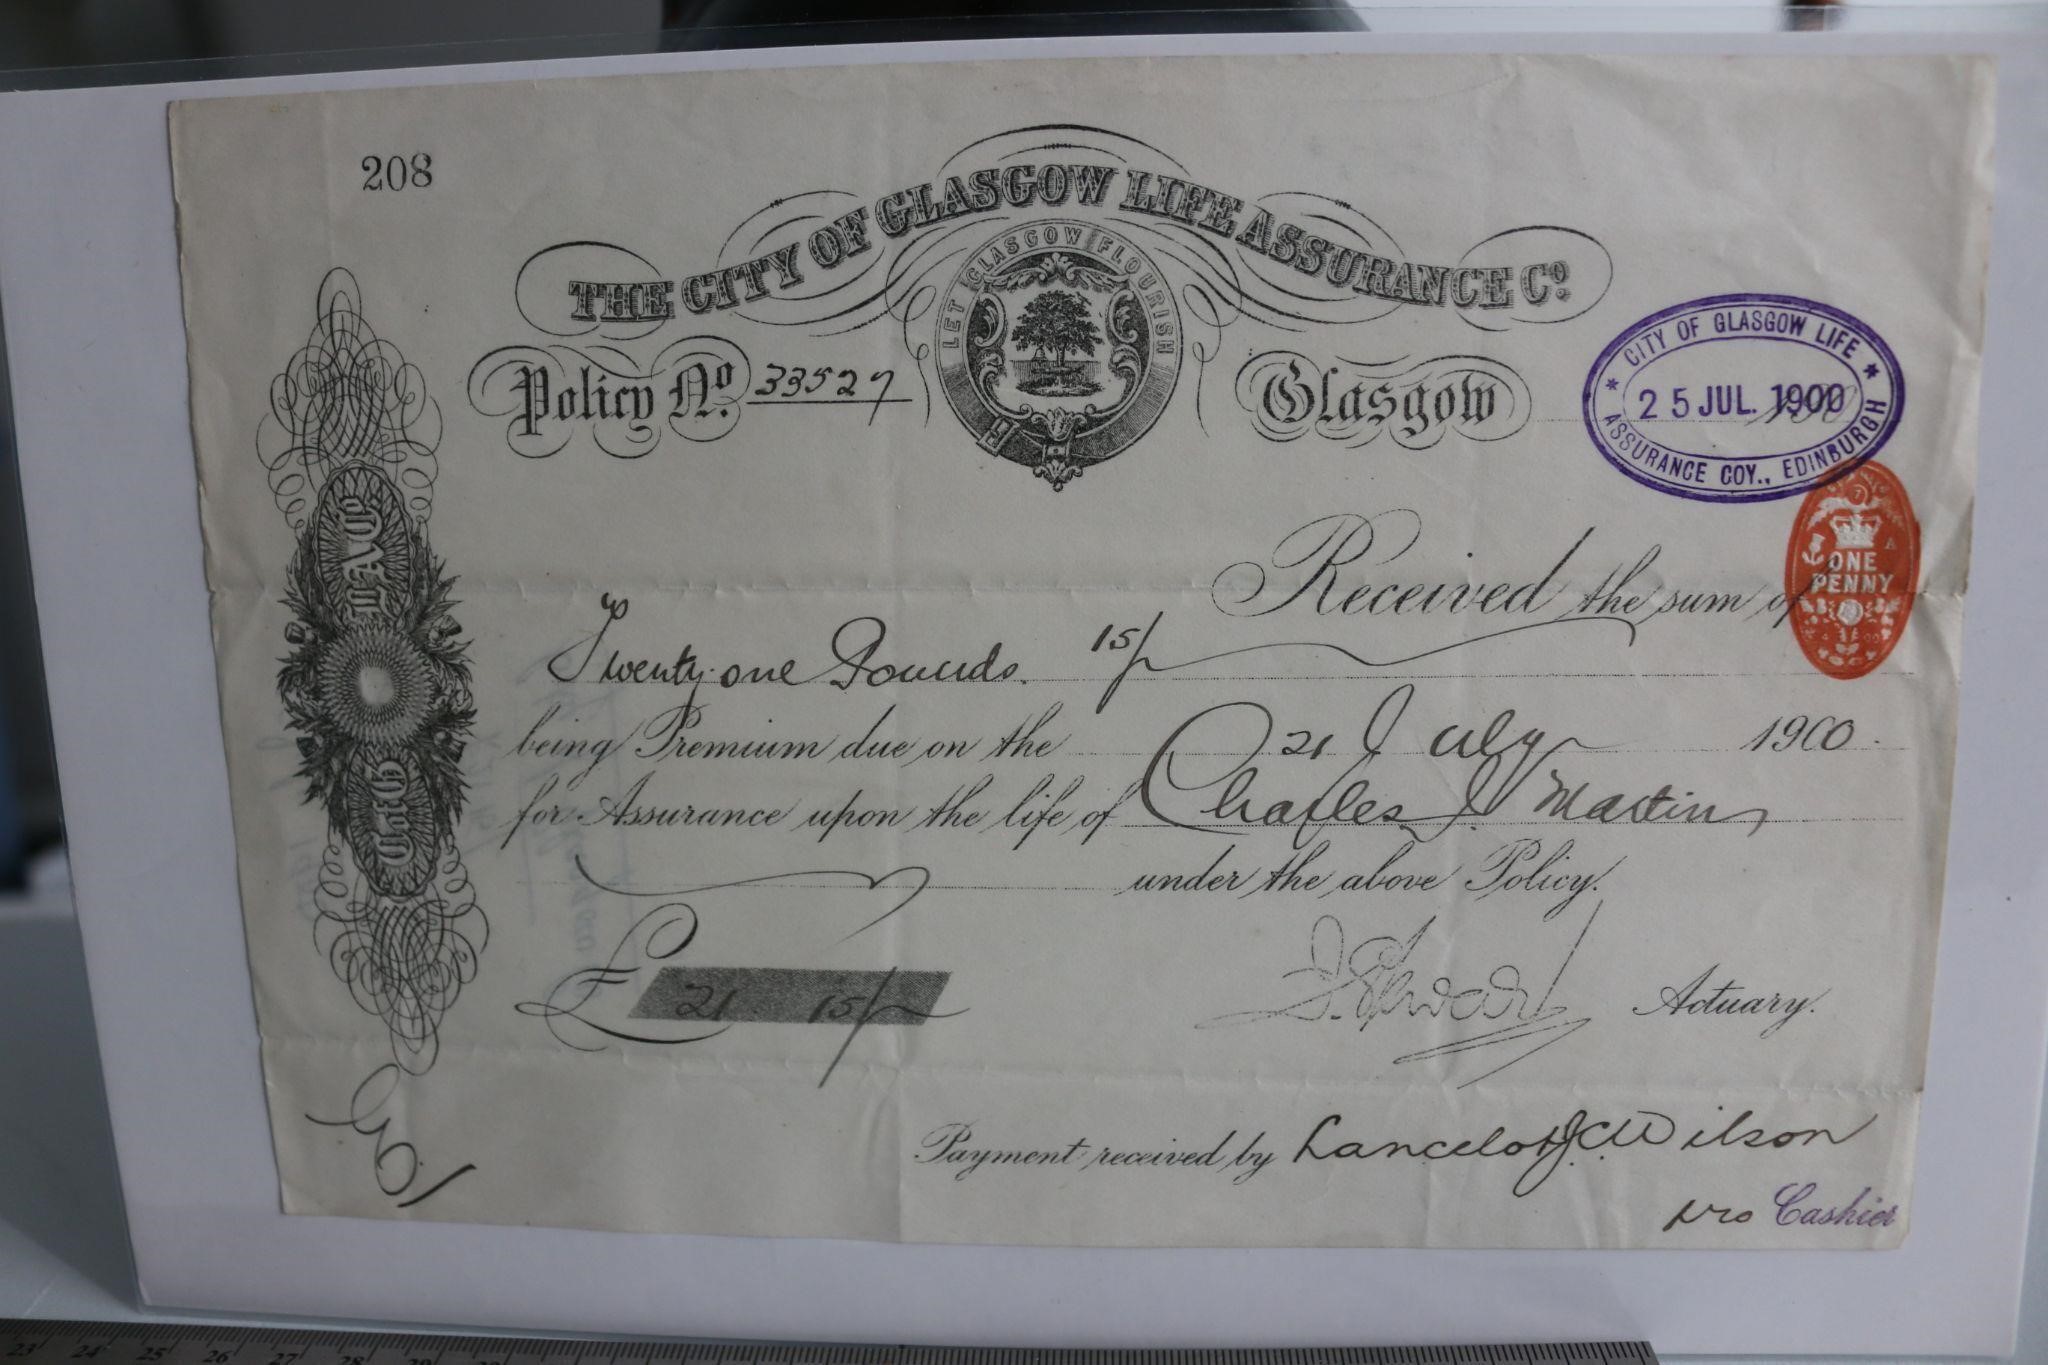 1900 Receipt The City of Glasgow Life Assurance